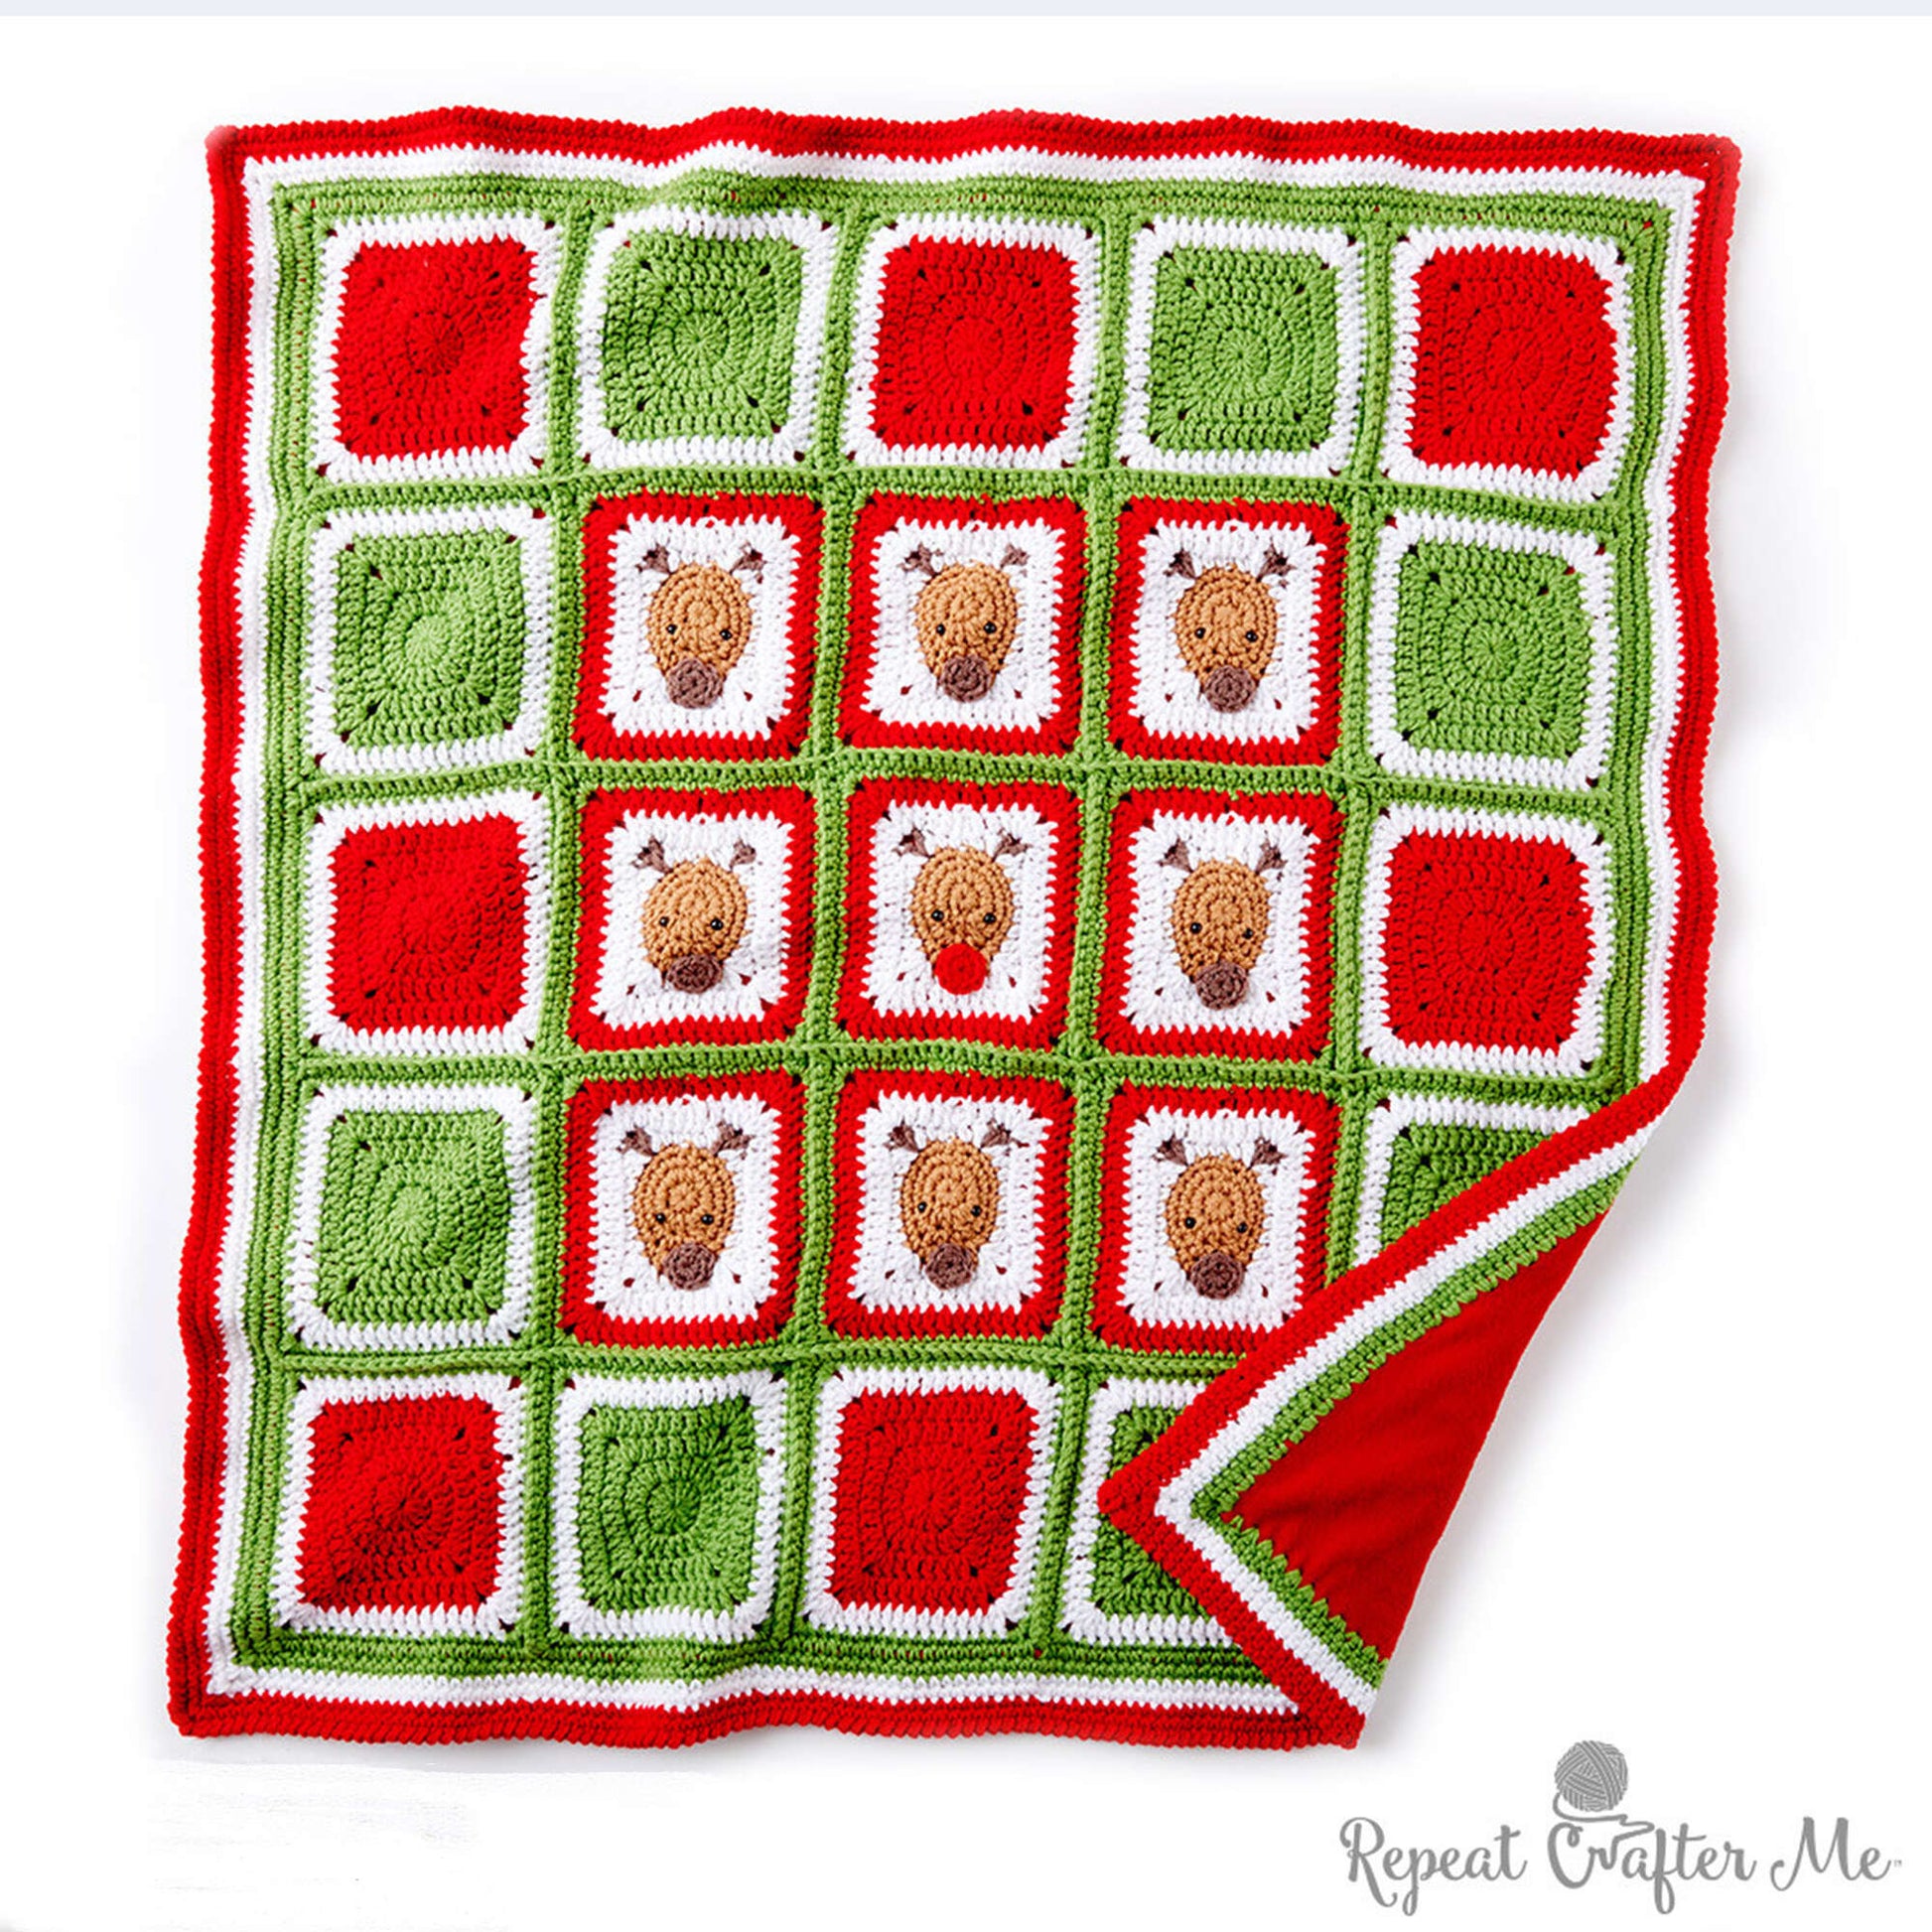 Bernat Crochet Christmas Reindeer Blanket Crochet Accessory made in Bernat Super Value yarn